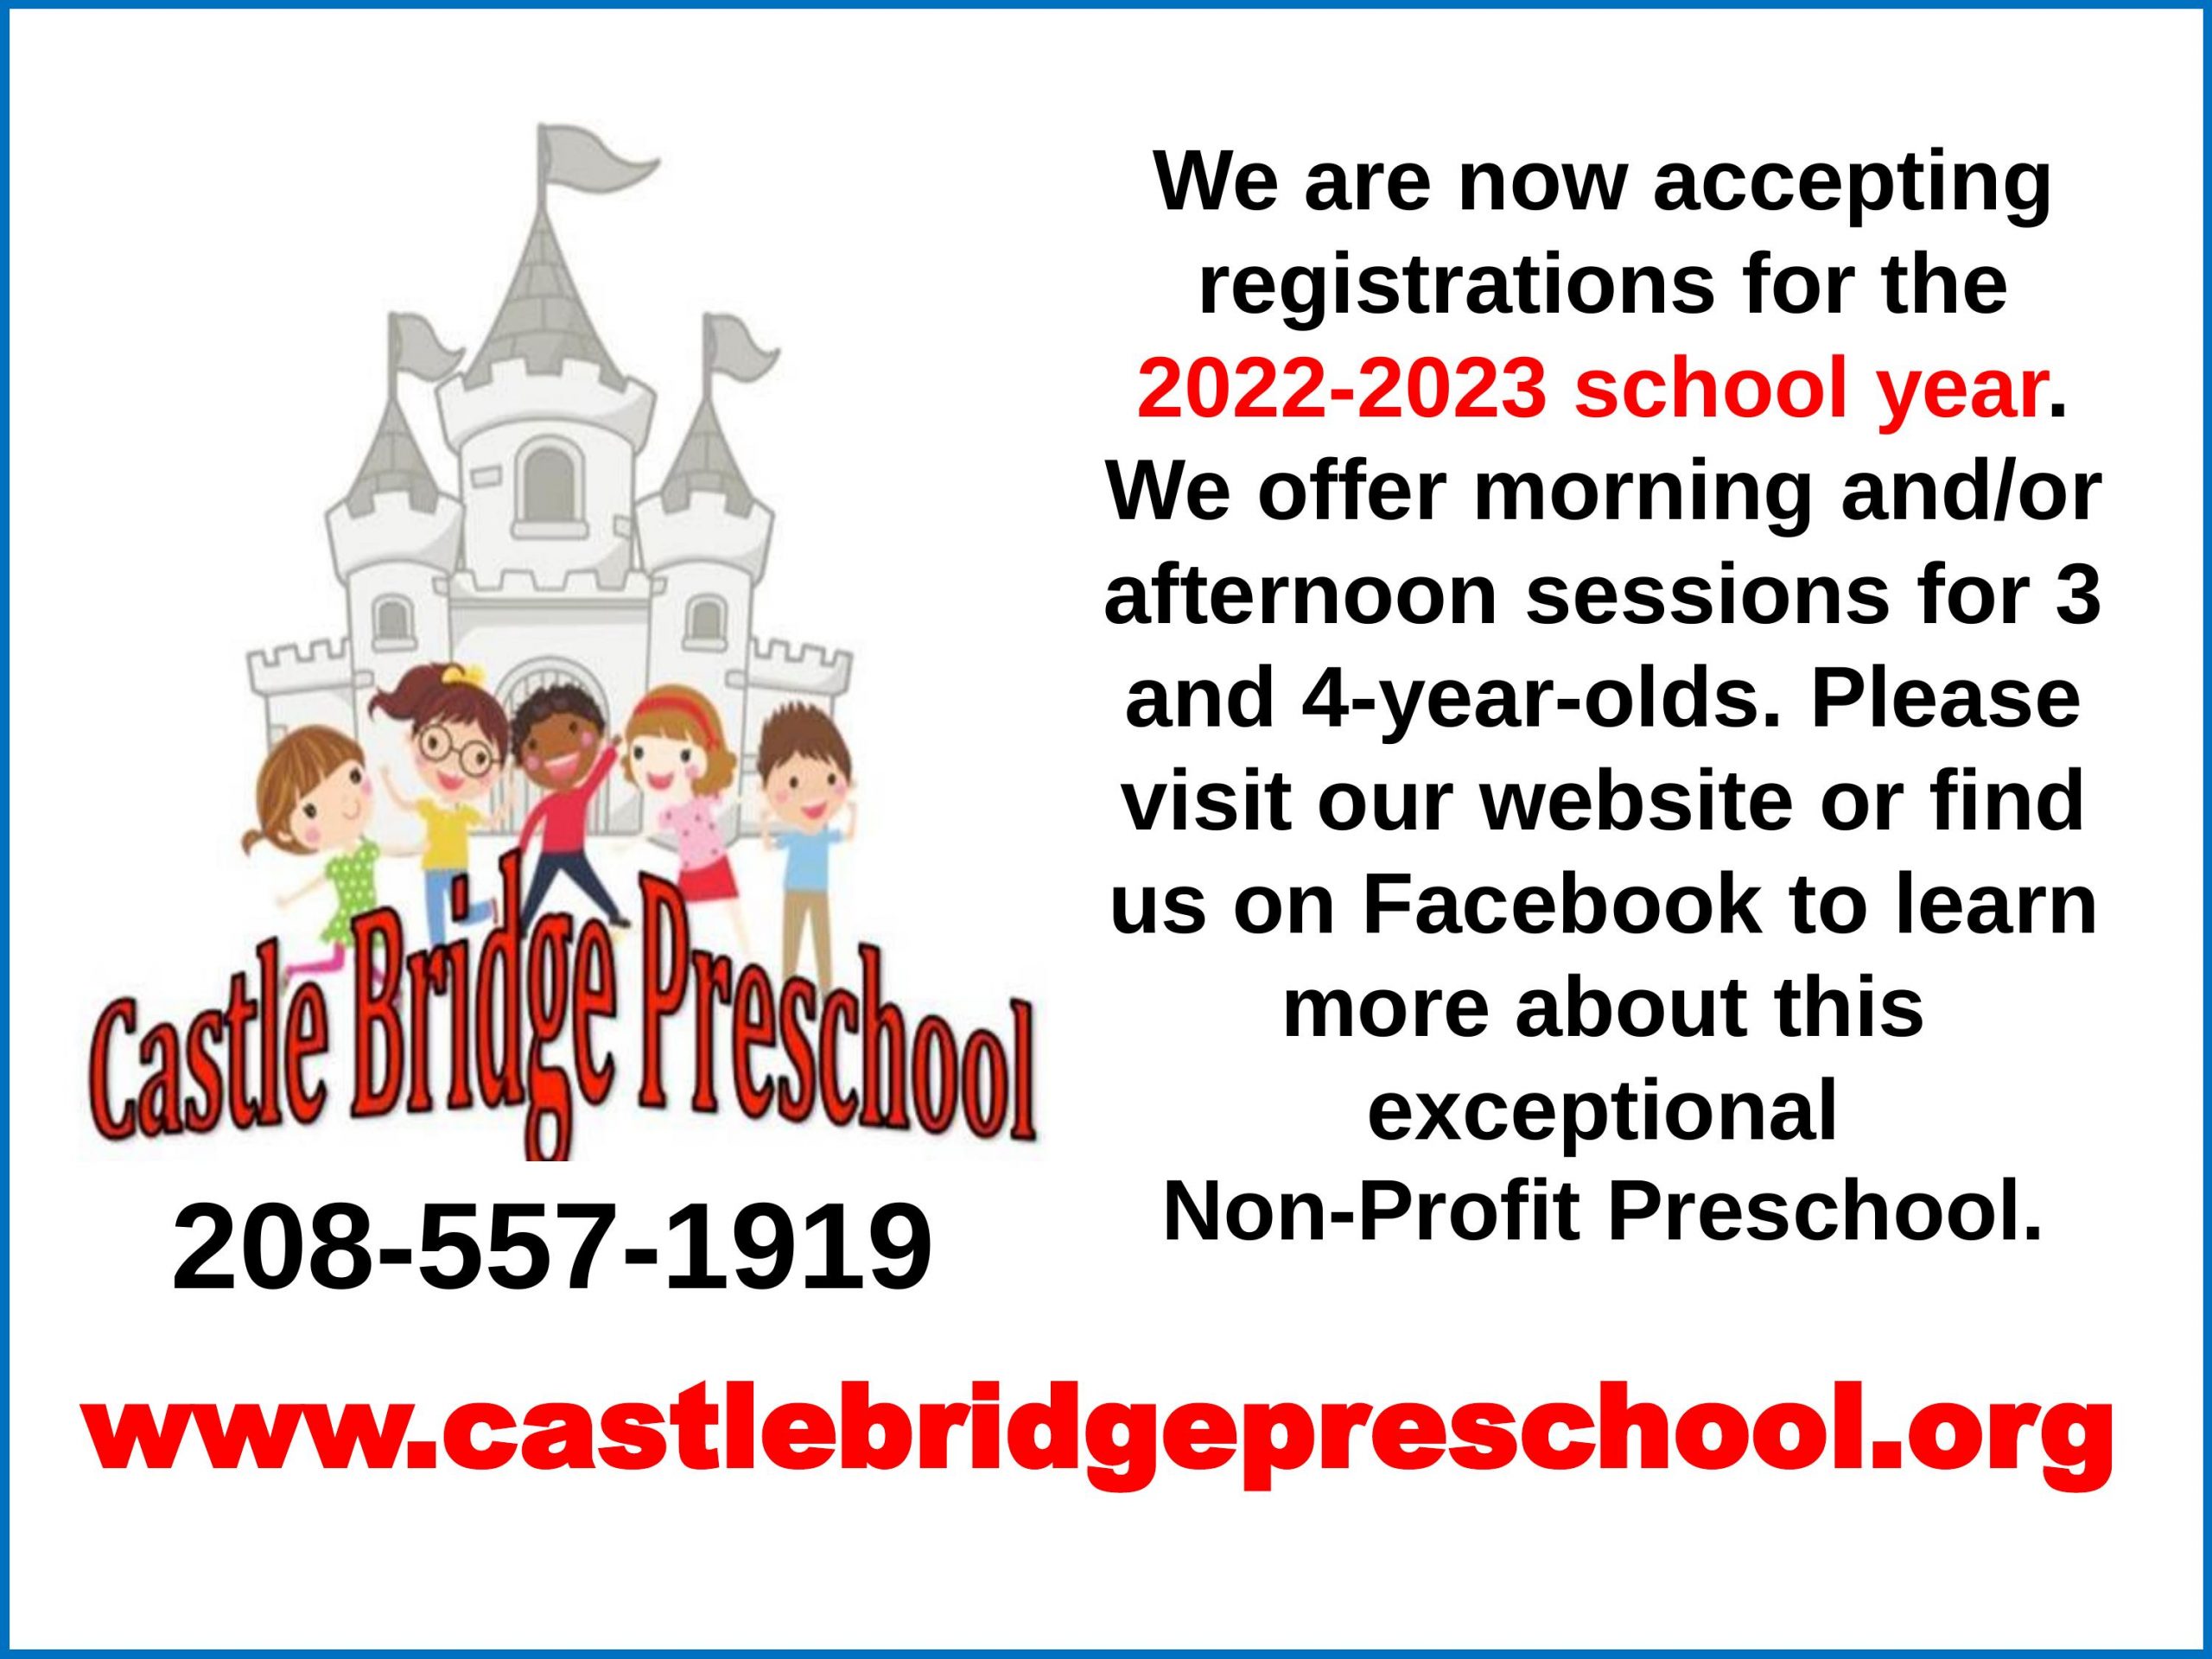 Castlebridgepreschool.org, Phone number 208-557-1919 Ad. Non-profit preschool accepting registrations for the 2022-2023 school year.